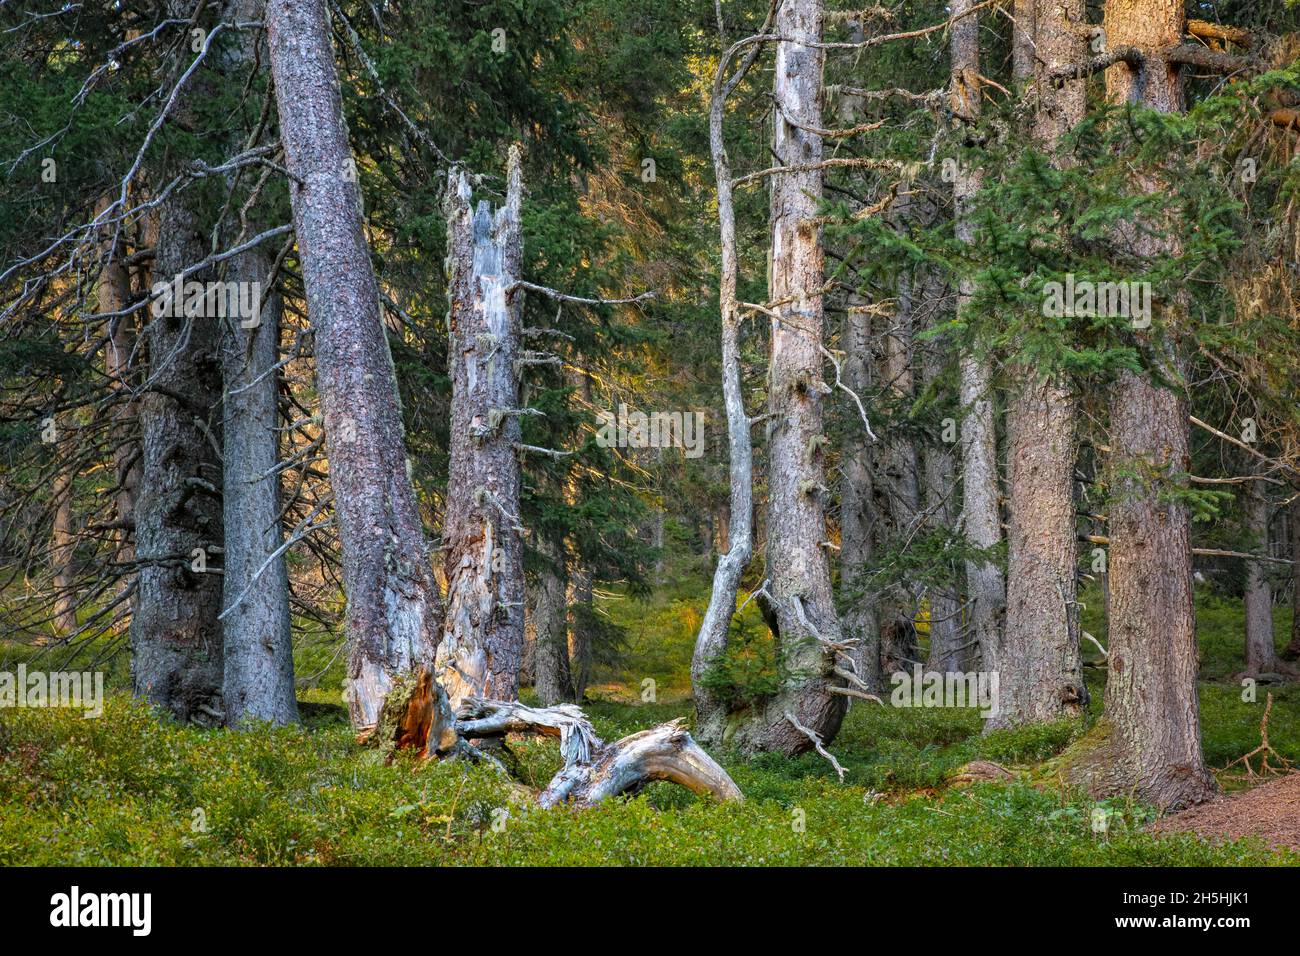 Abete europeo (Picea abies) con una discreta presenza di arbusti nani, Naunz, Tuxer Voralpen, Tirolo, Austria Foto Stock